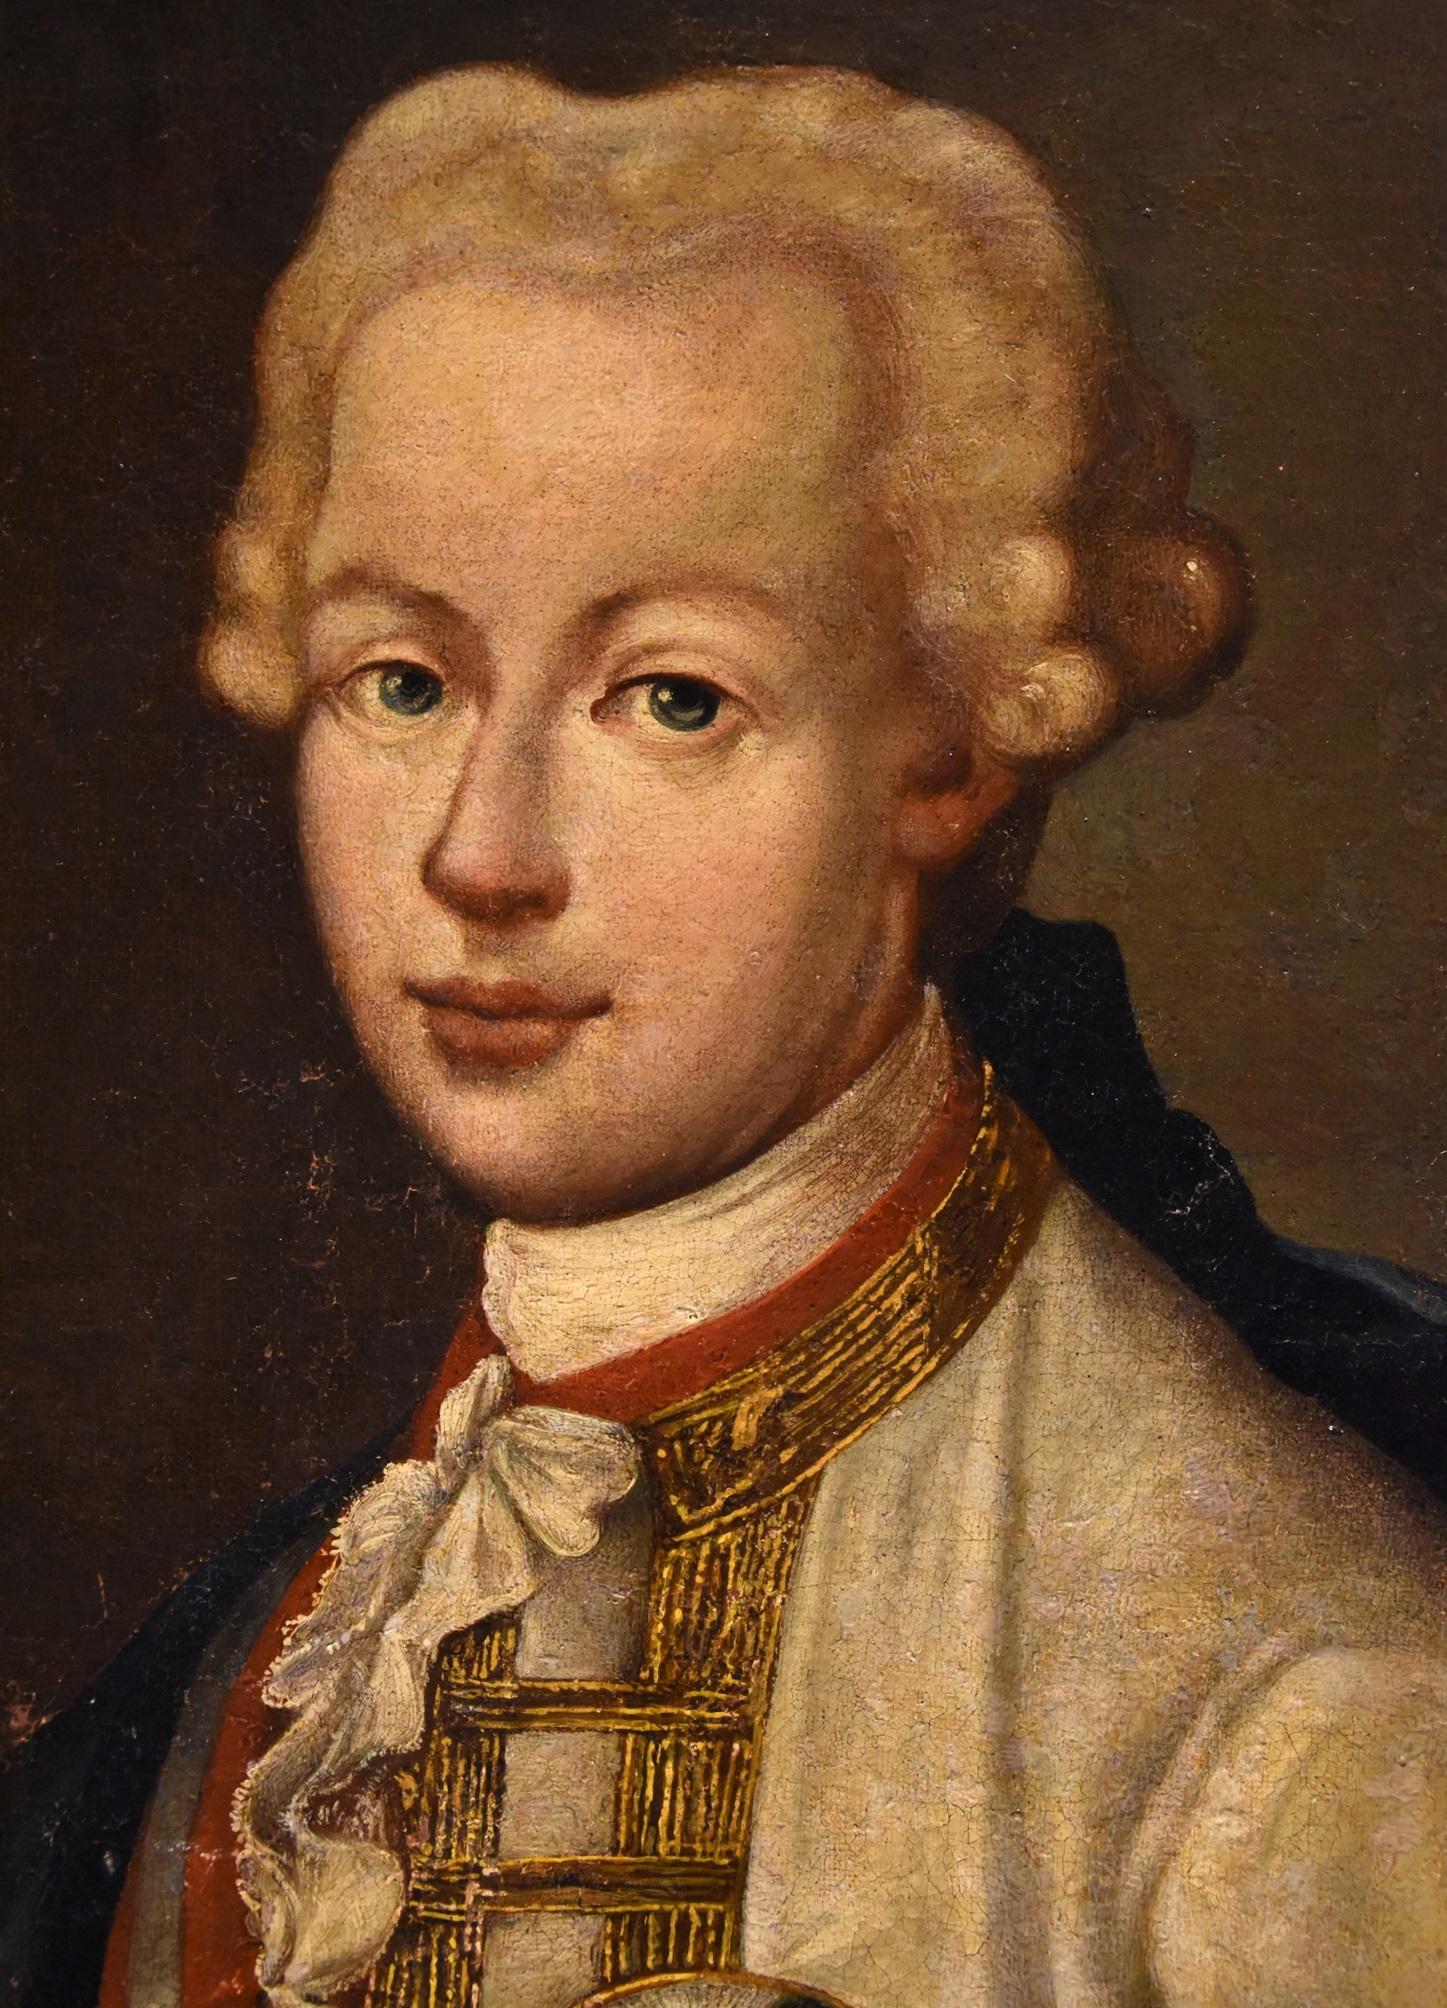 Portrait Emperor Peter Van Meytens Paint Oil on canvas 18th Century Flemish Art 4